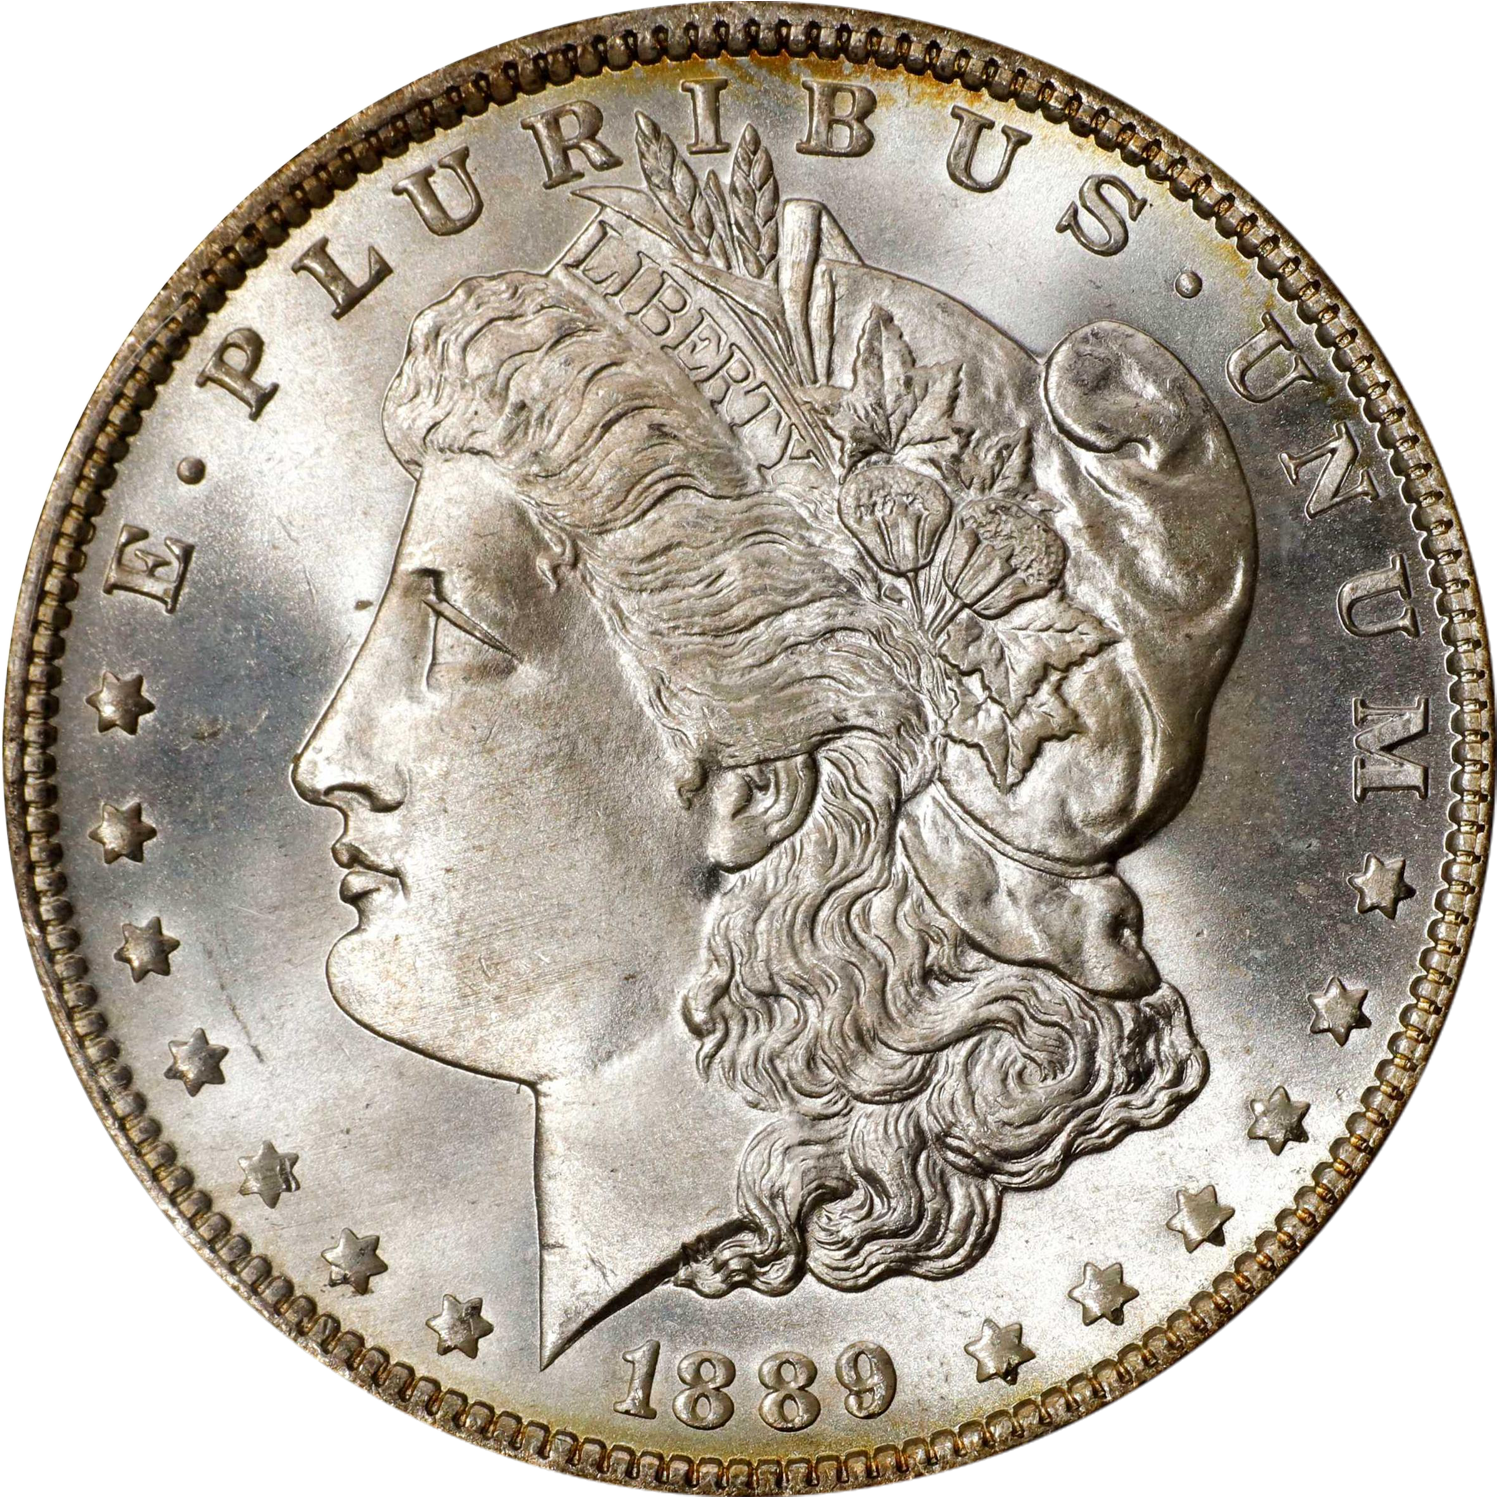 1889 new orleans mint morgan silver dollar value